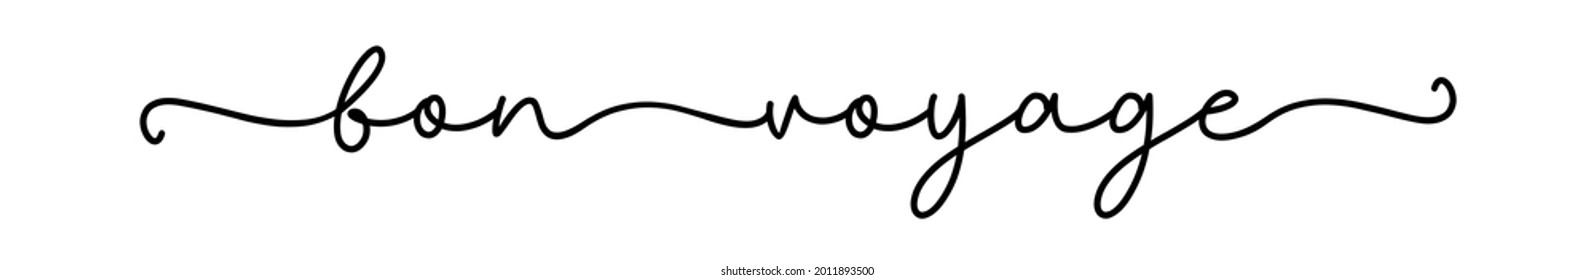 BON VOYAGE. Typography script travel quote bon voyage. Hand drawn modern calligraphy inspiring text - bon voyage. Label, stamp, logo icon vector design.